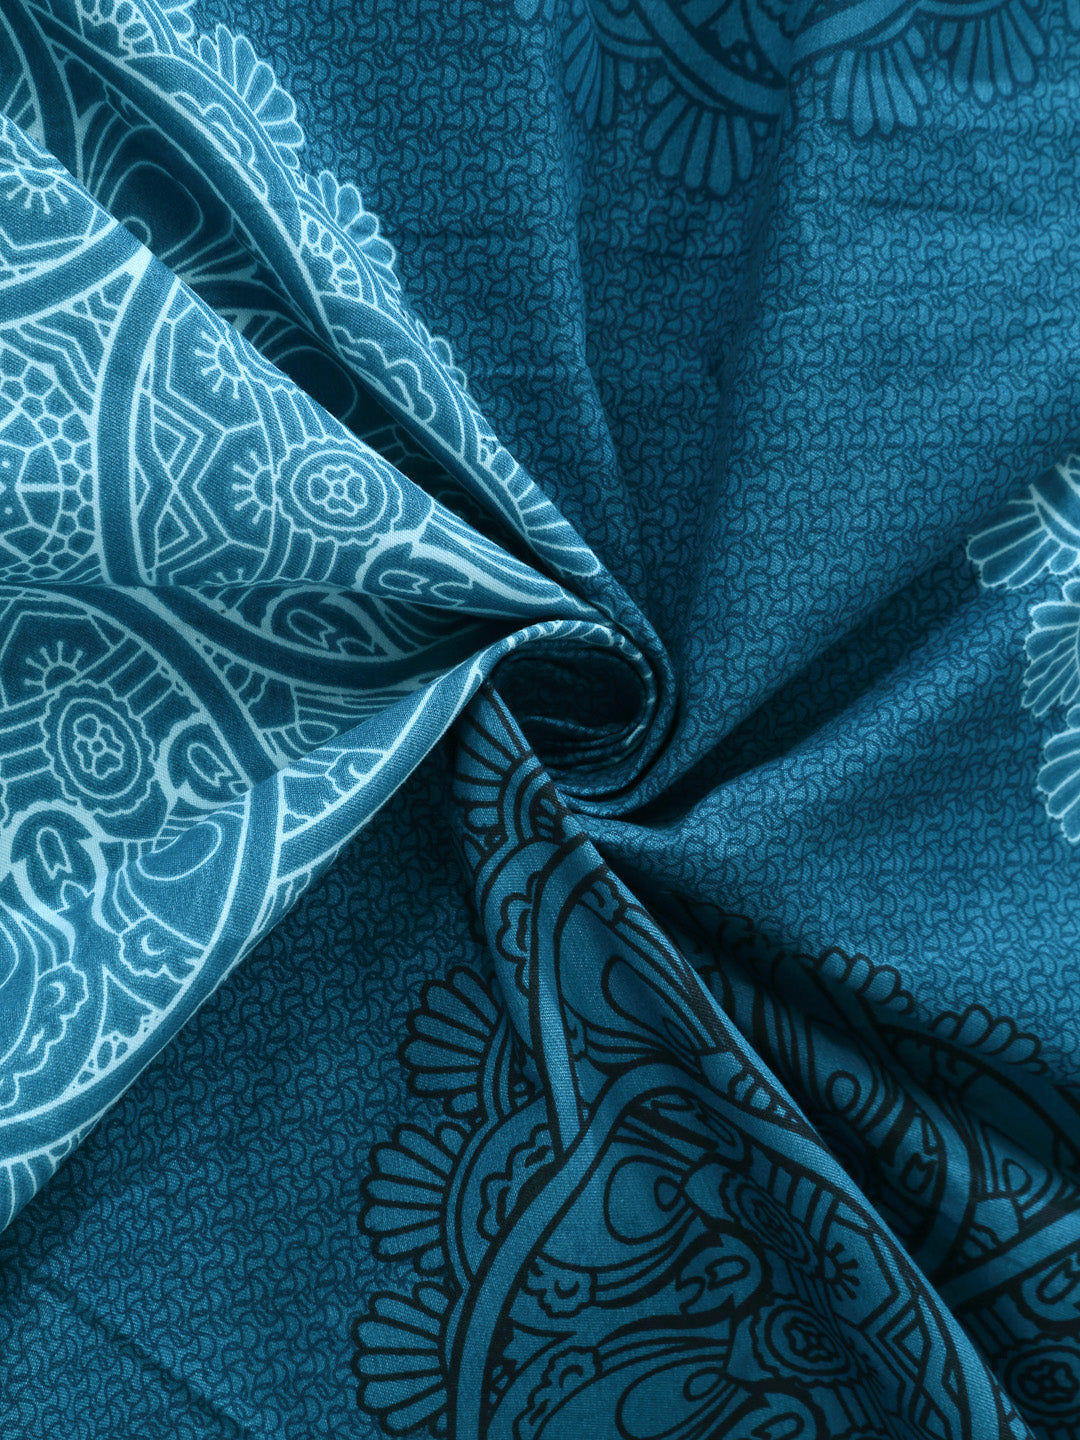 Arrabi Blue Indian TC Cotton Blend King Size Bedsheet with 2 Pillow Covers (250 X 220 cm)